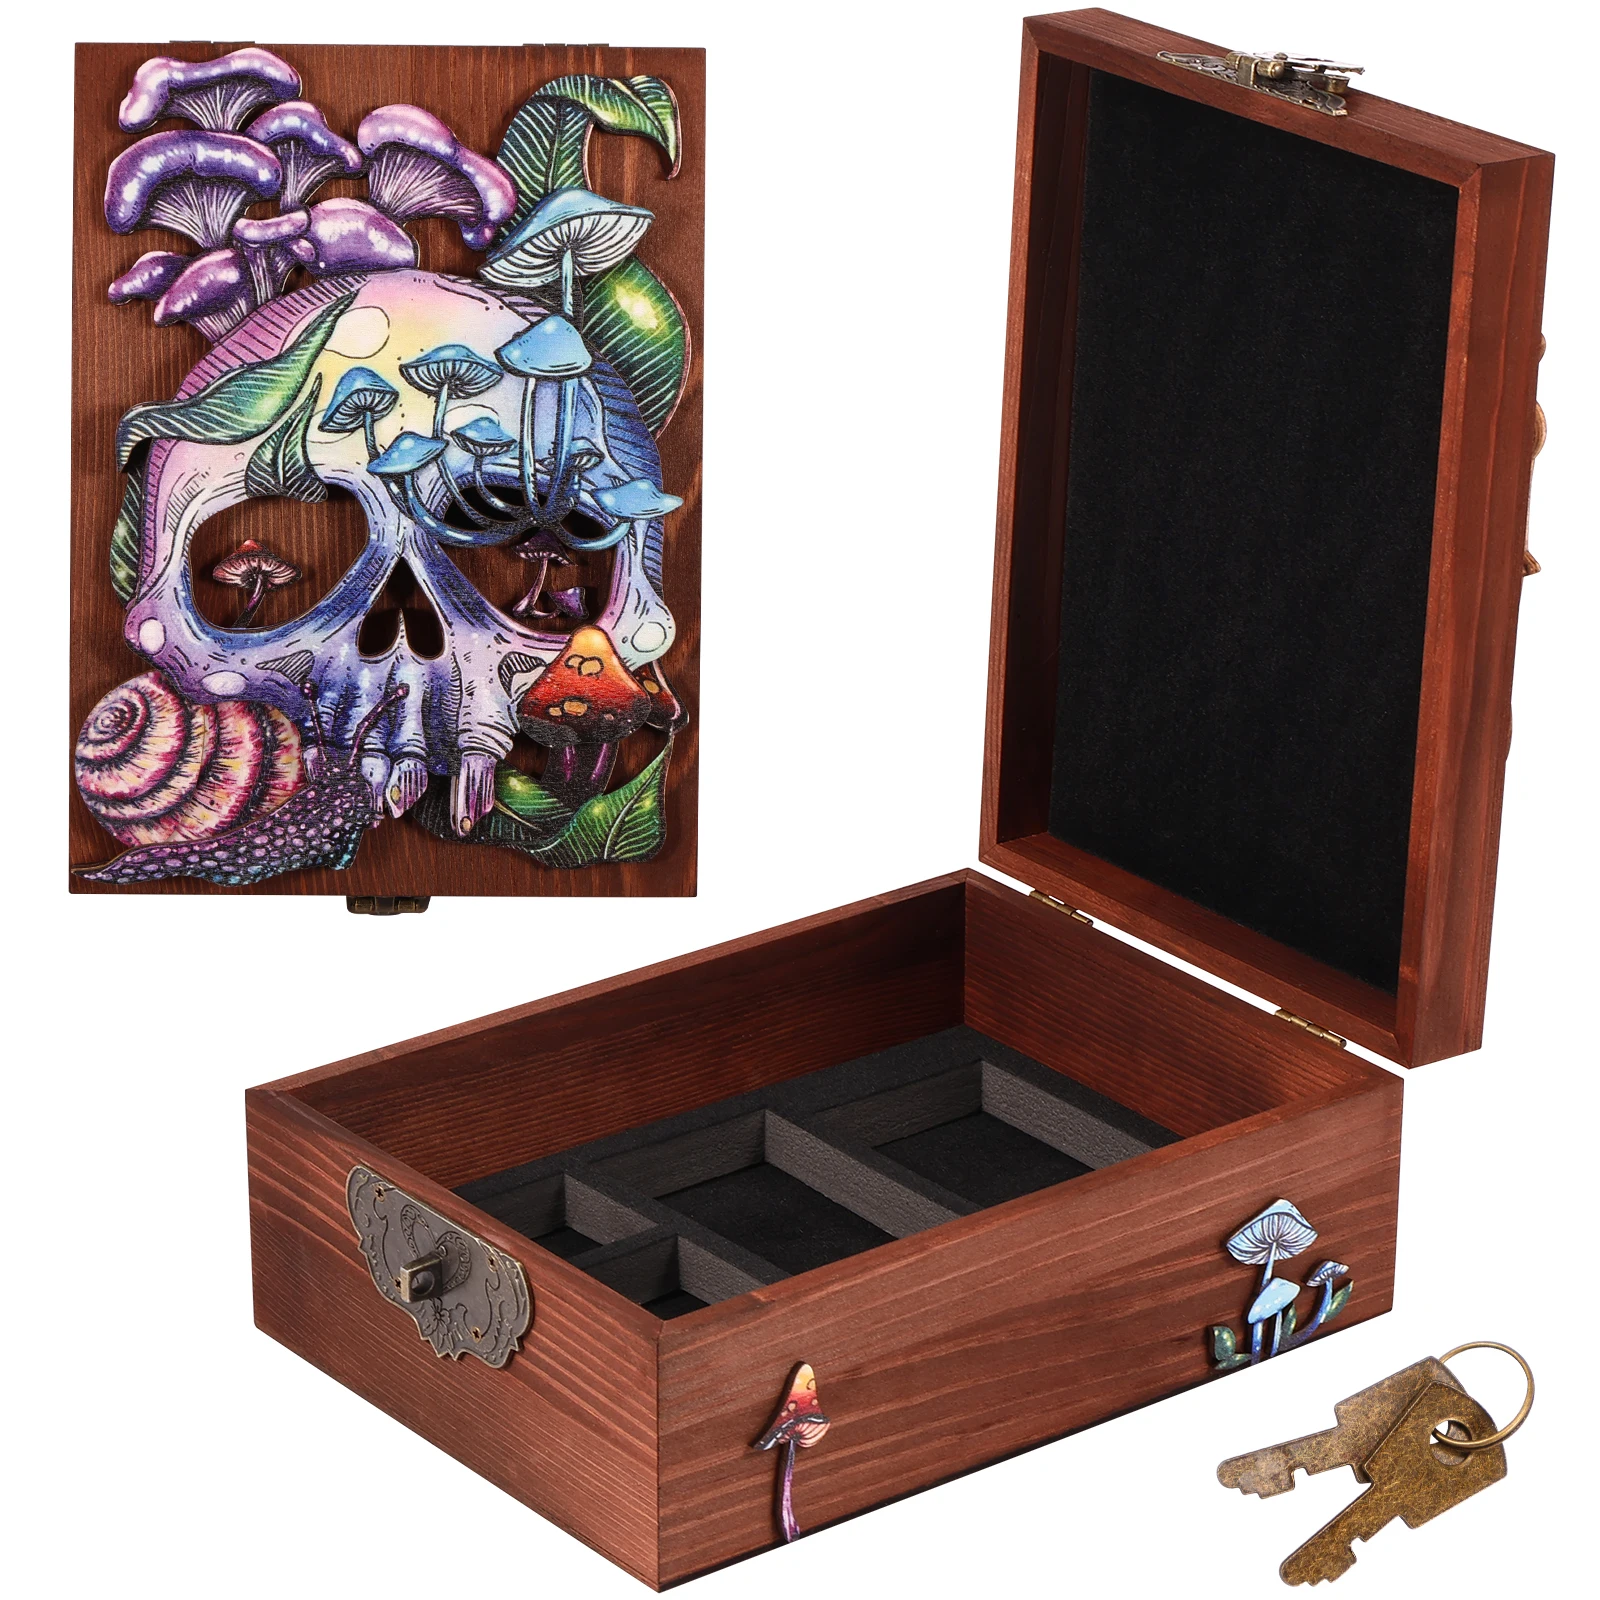 

New Skull Hidden Key Box Wooden Key Hidden Box with Lock and Key Decorative Gothic Themed Storage Box Personalized Treasure Lock